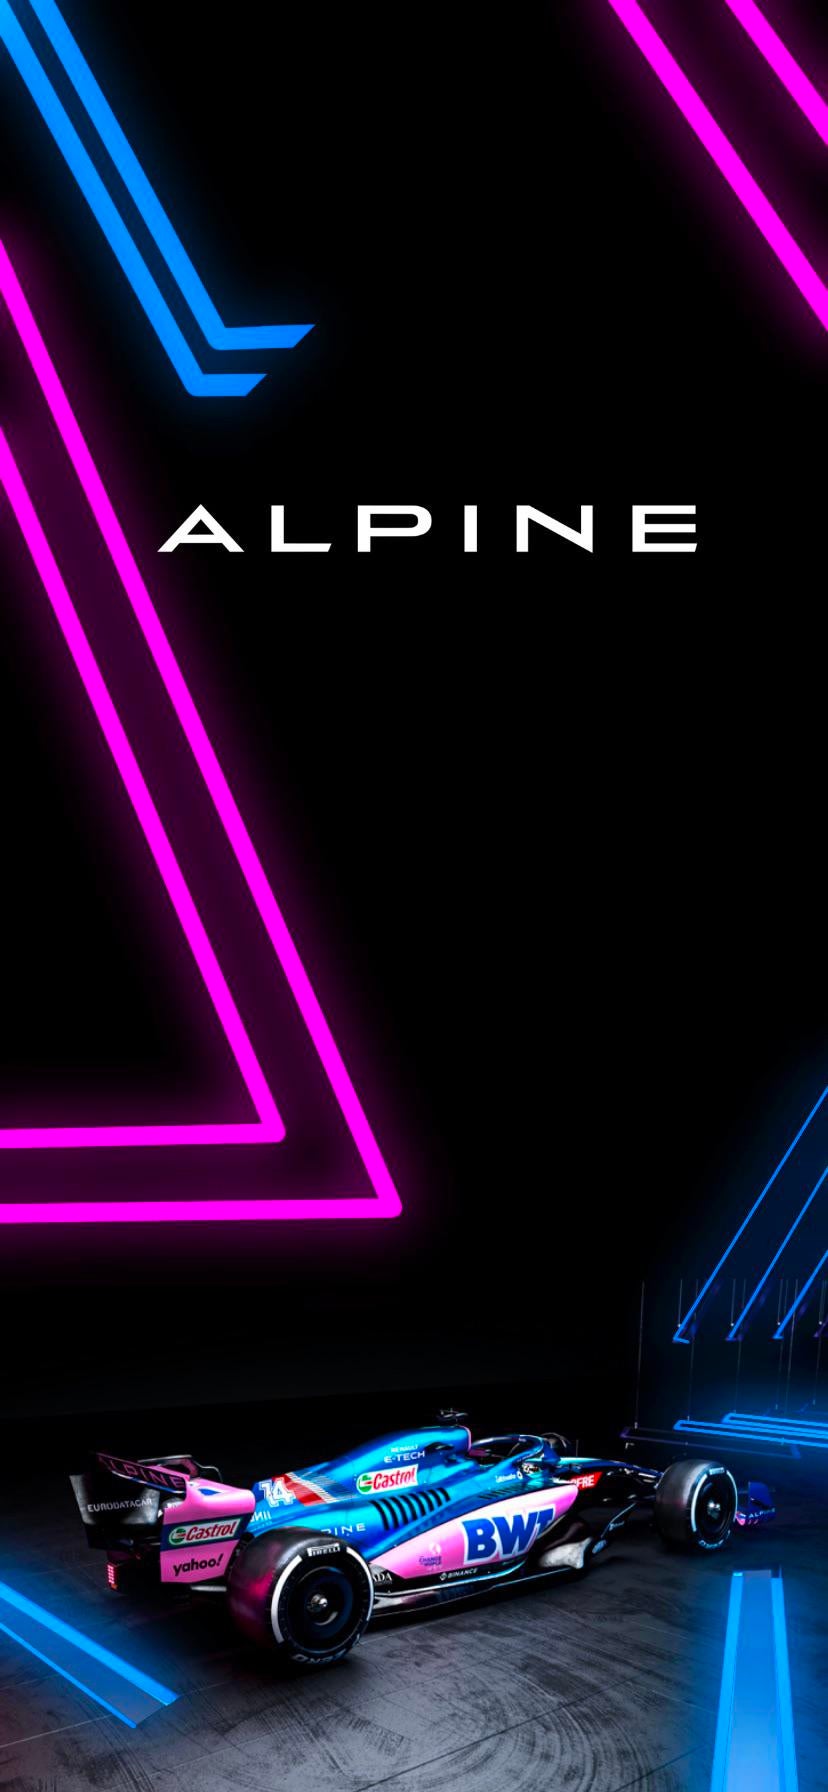 2022 Alpine Poster Wallpaper